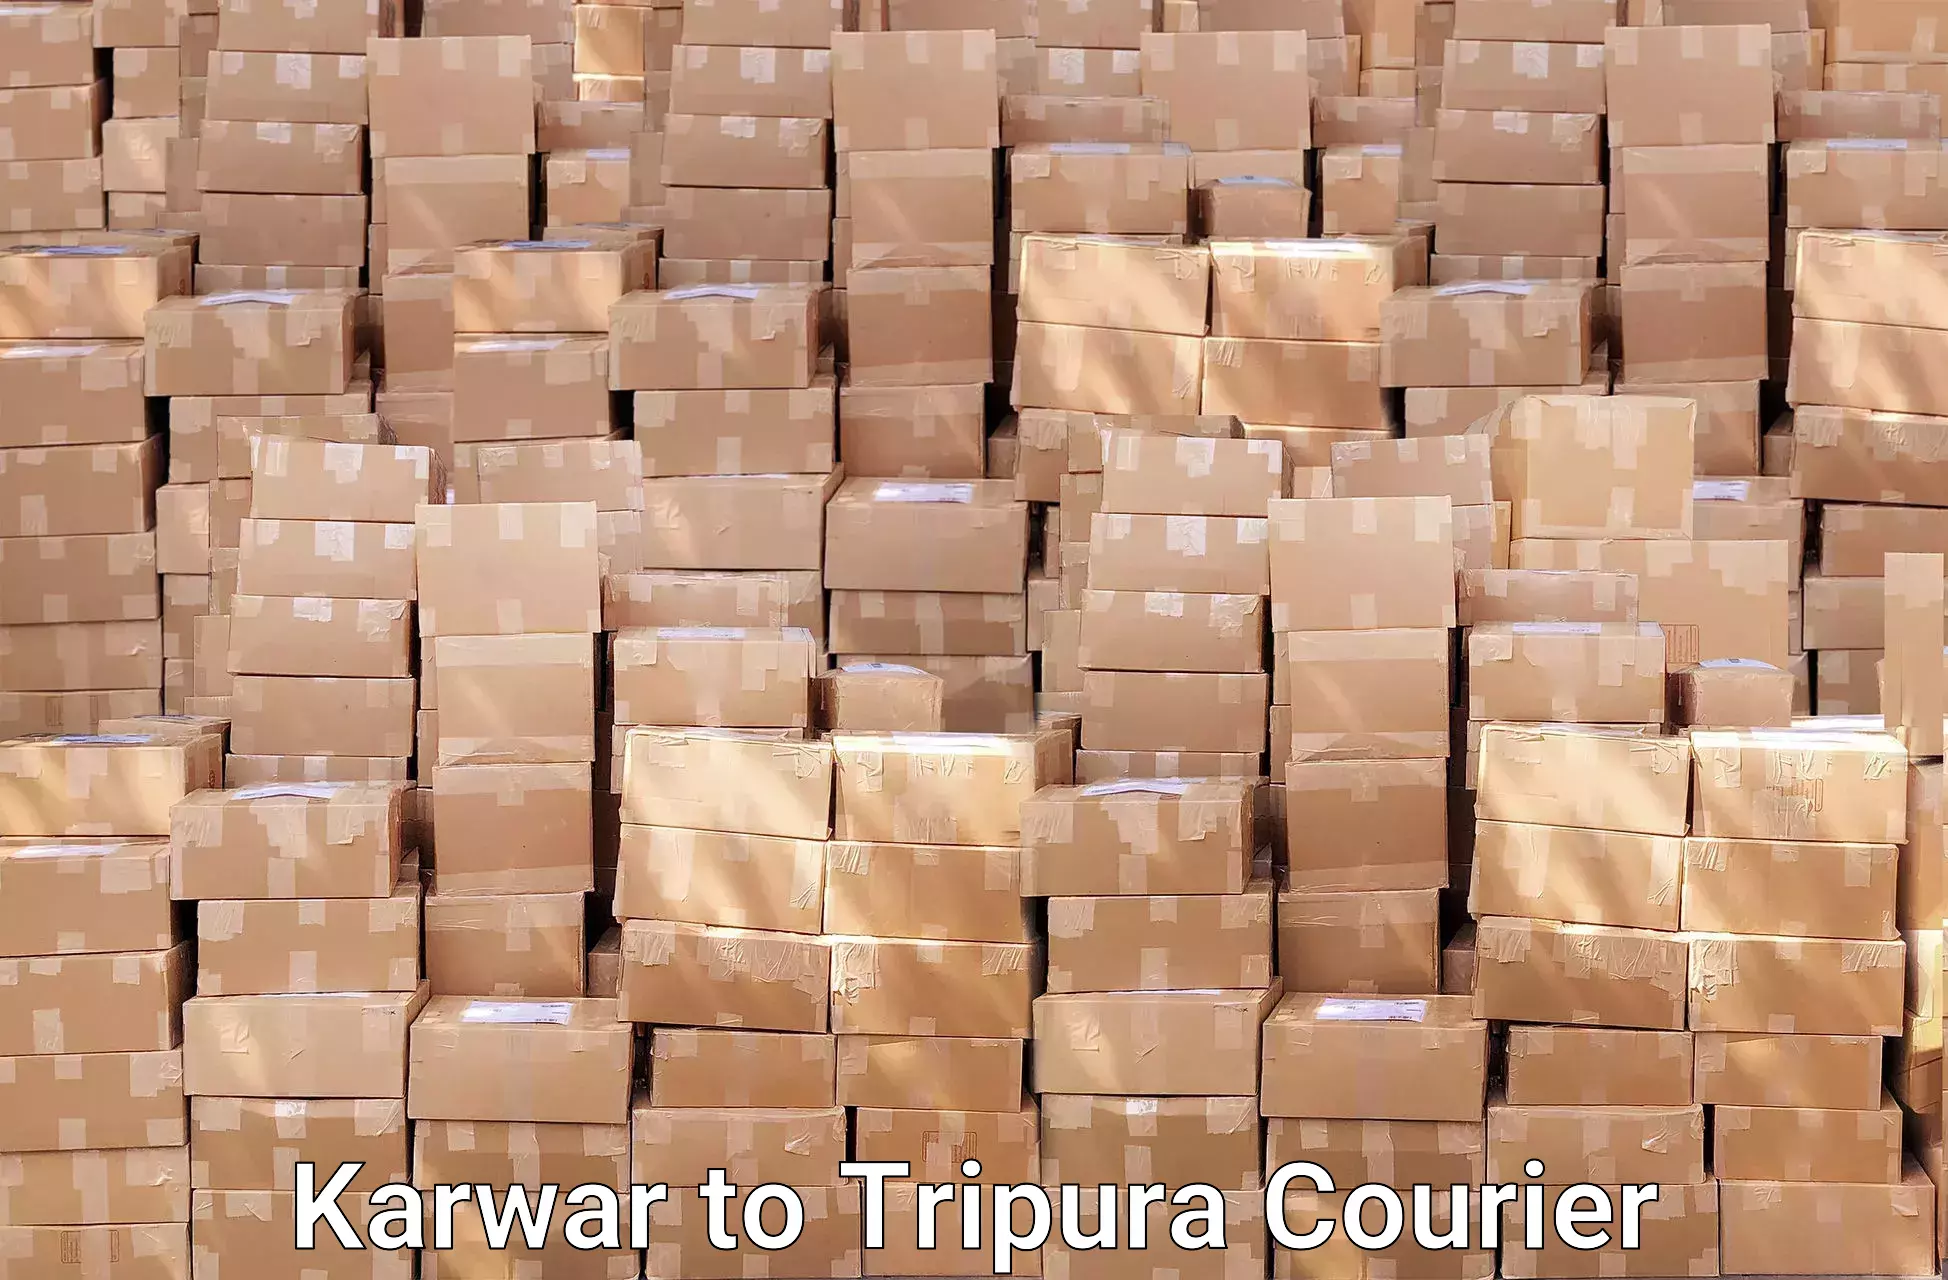 Professional moving company Karwar to Kailashahar